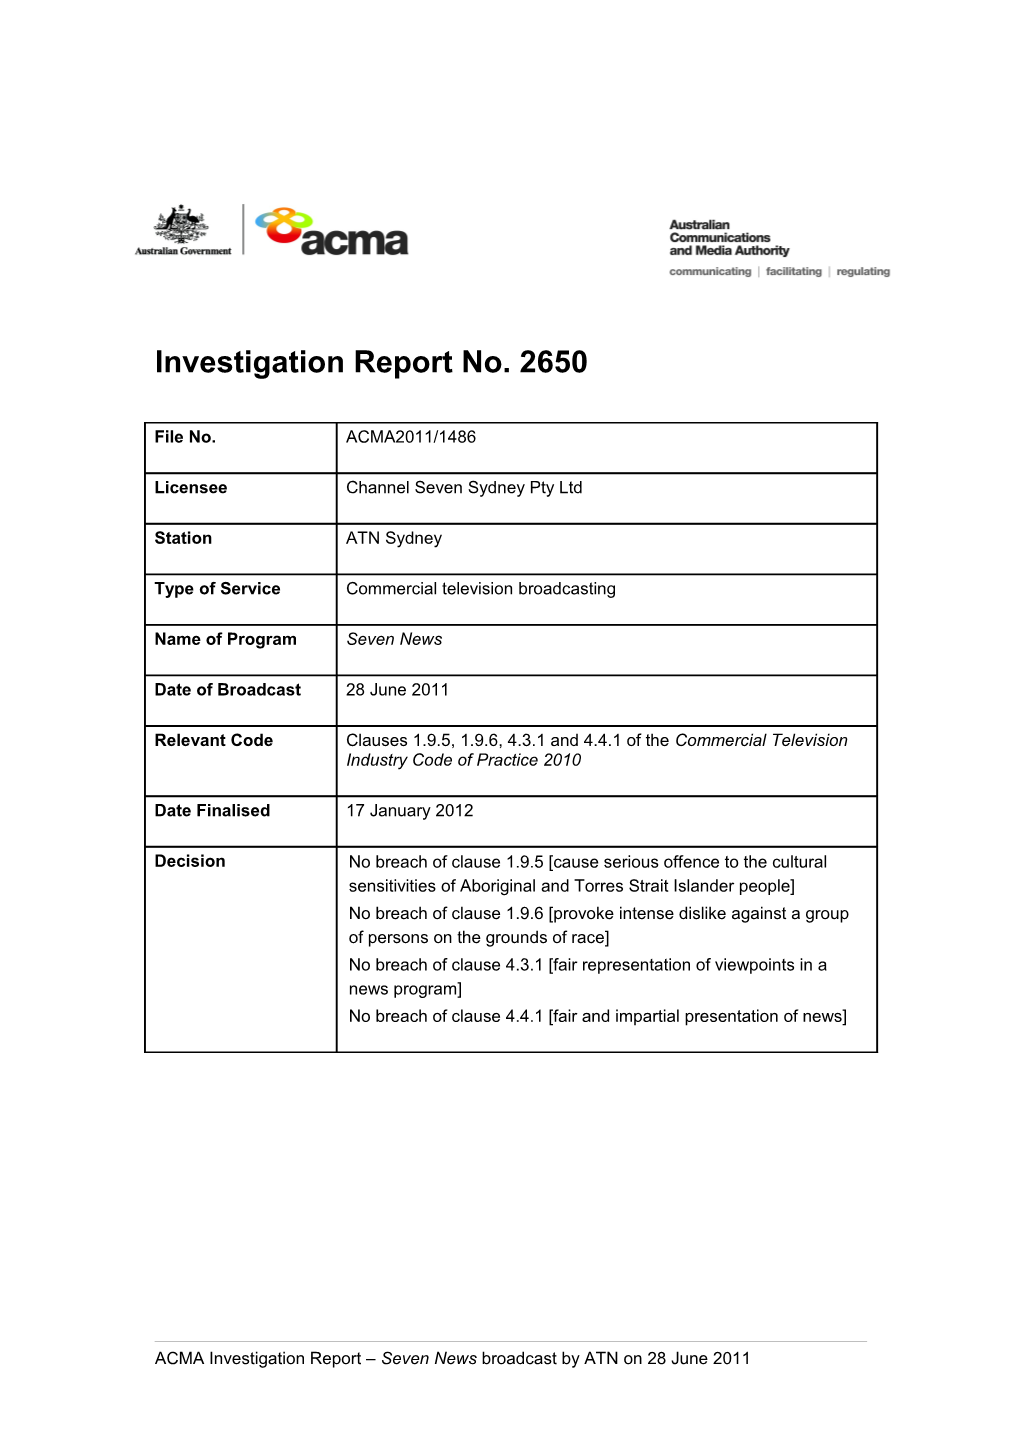 ATN Sydney - ACMA Investigation Report 2650